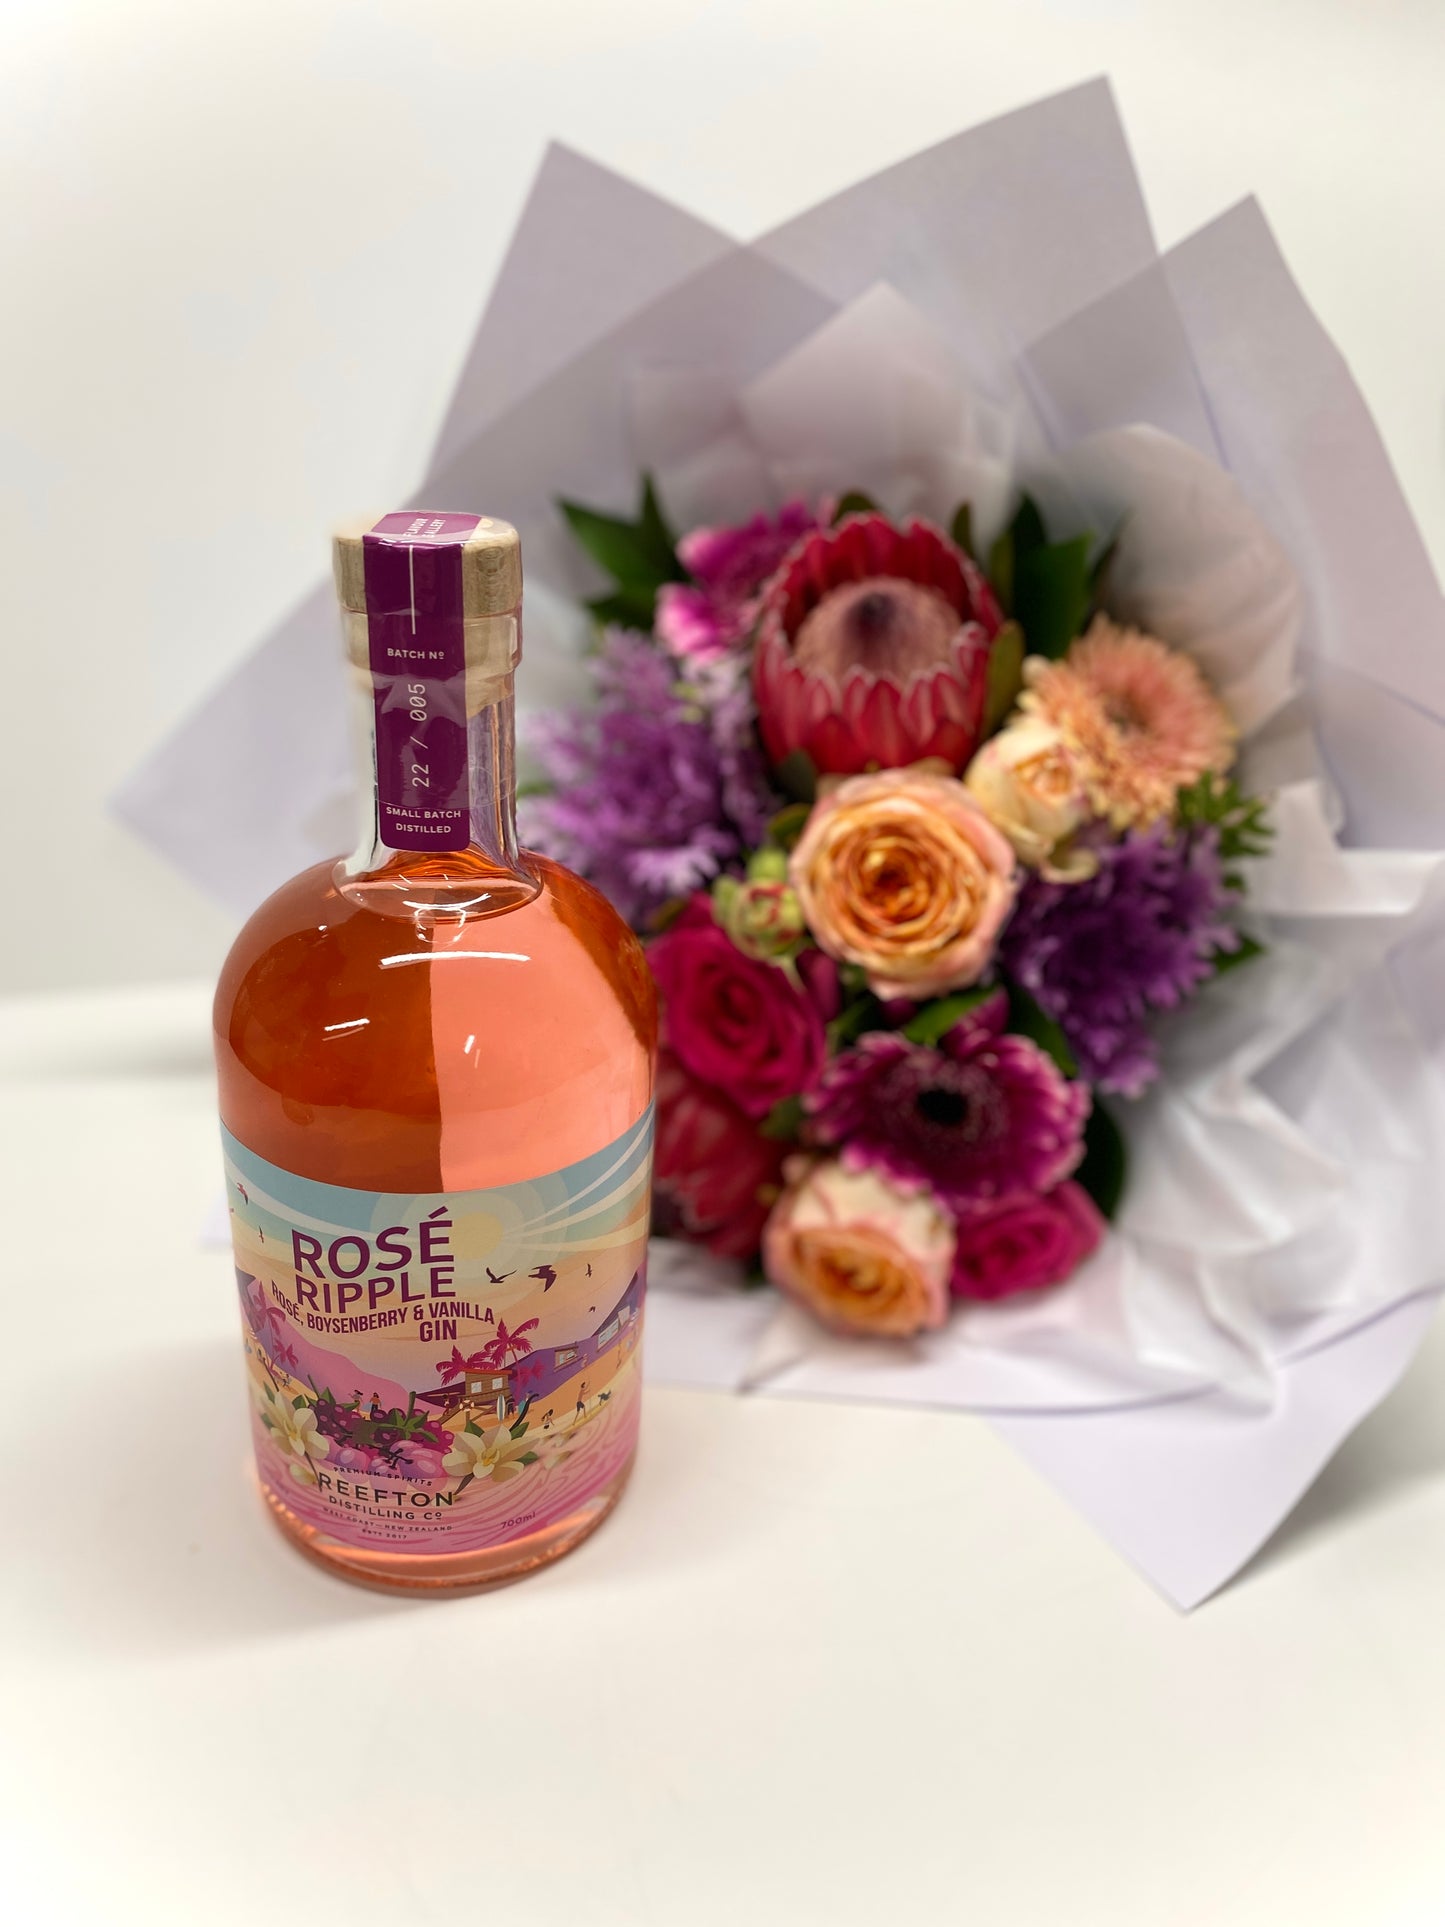 Reefton Distilling Co. Rosé Ripple with Bouquet